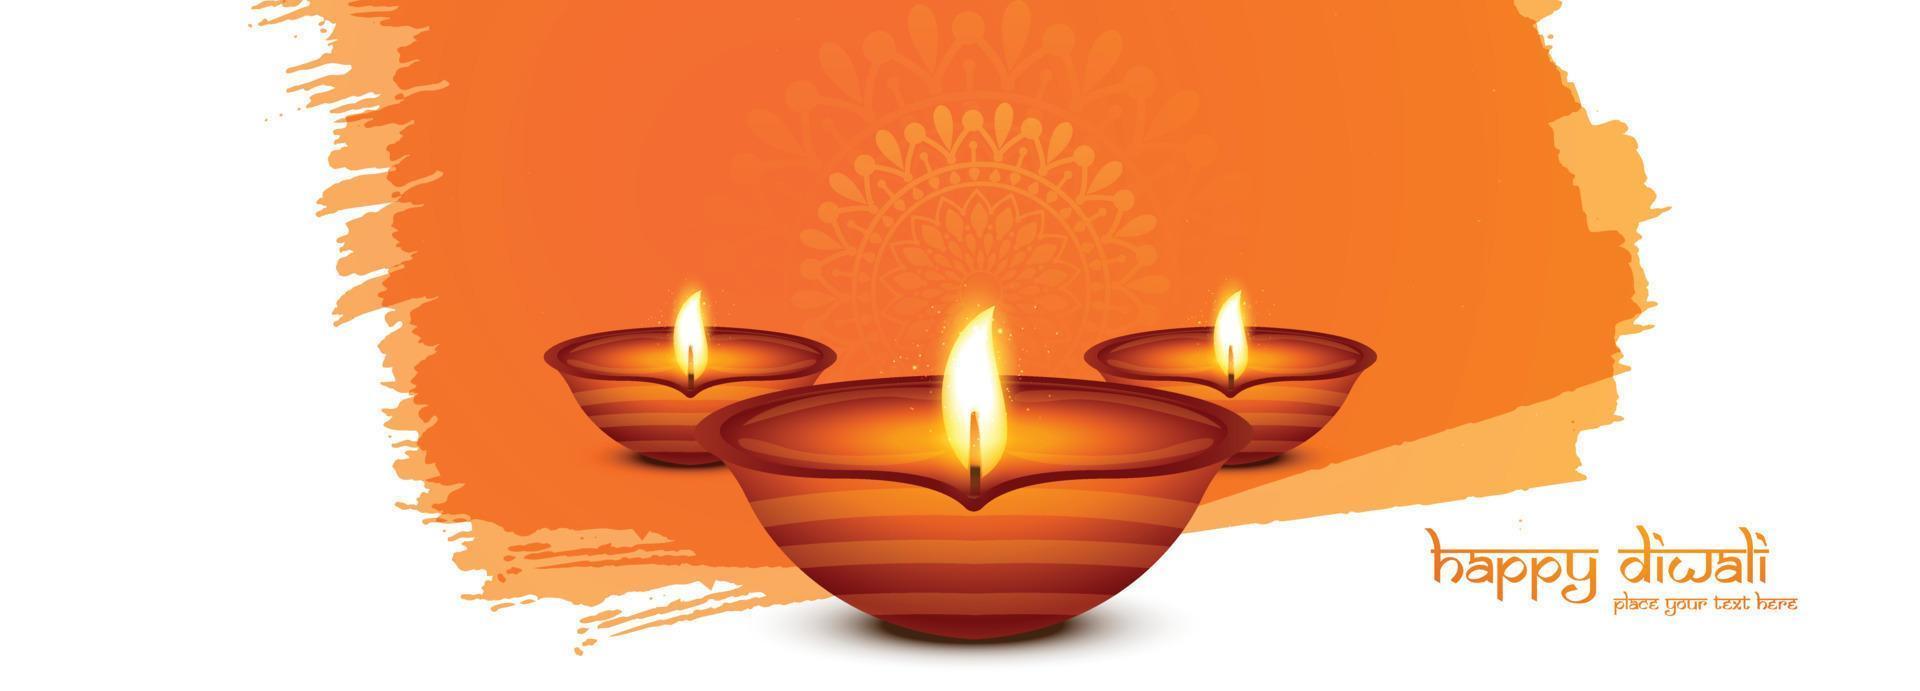 feliz diwali diya lámpara de aceite festival hindú celebración fondo de banner vector